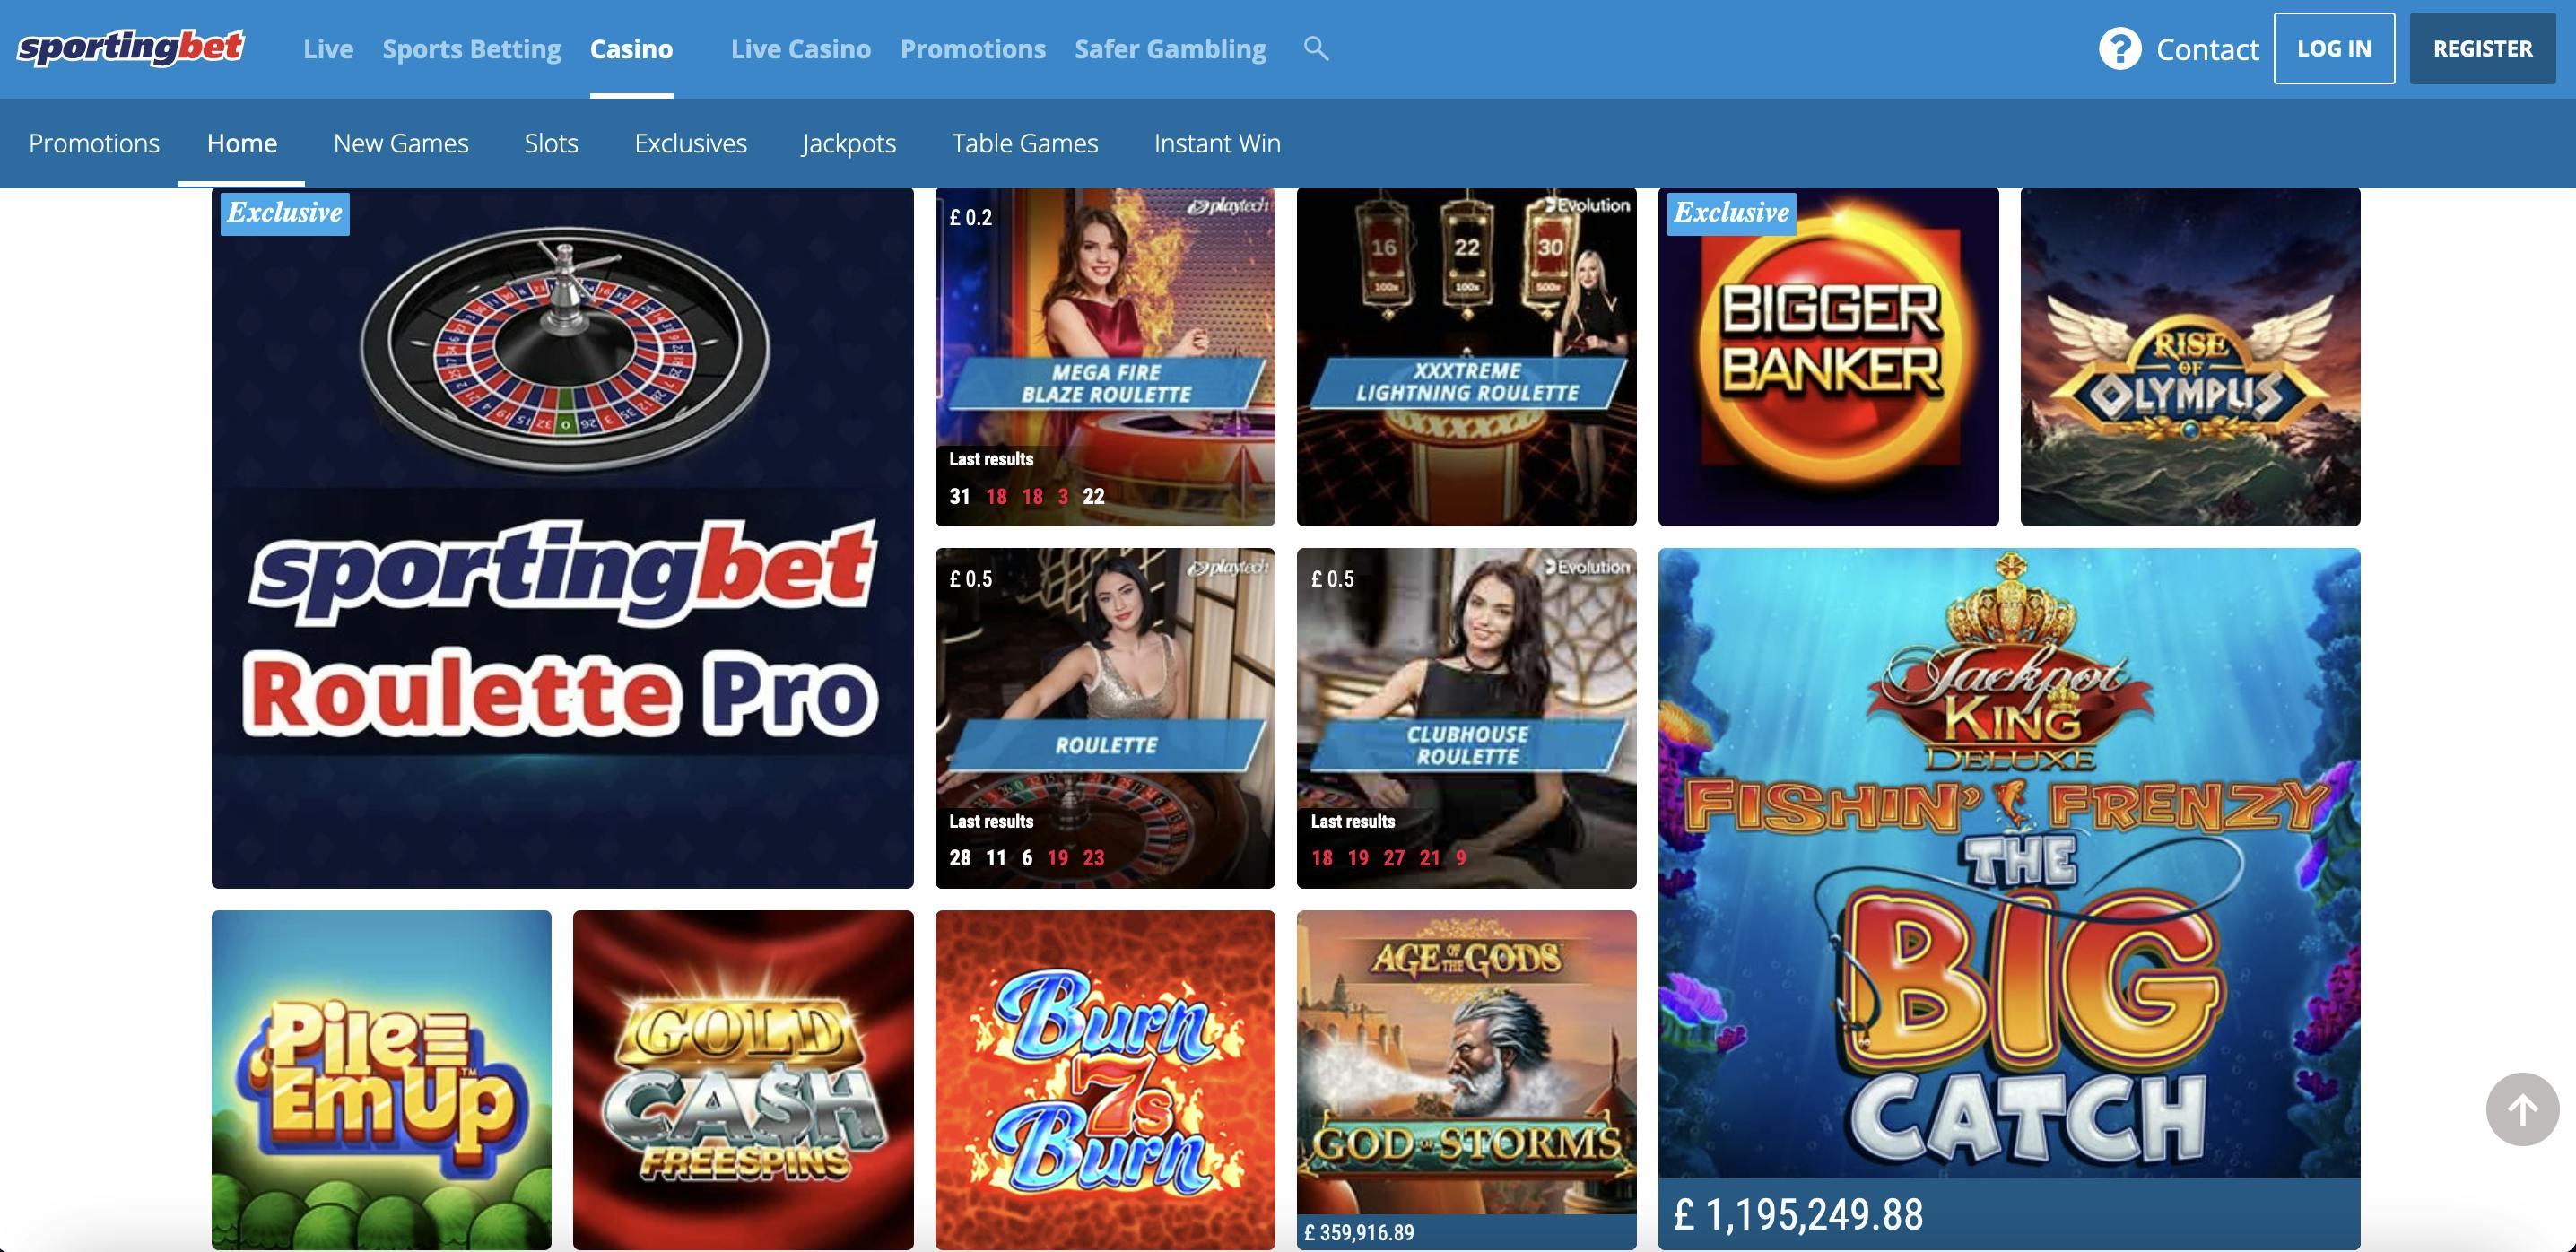 Sportingbet casino homepage<br>